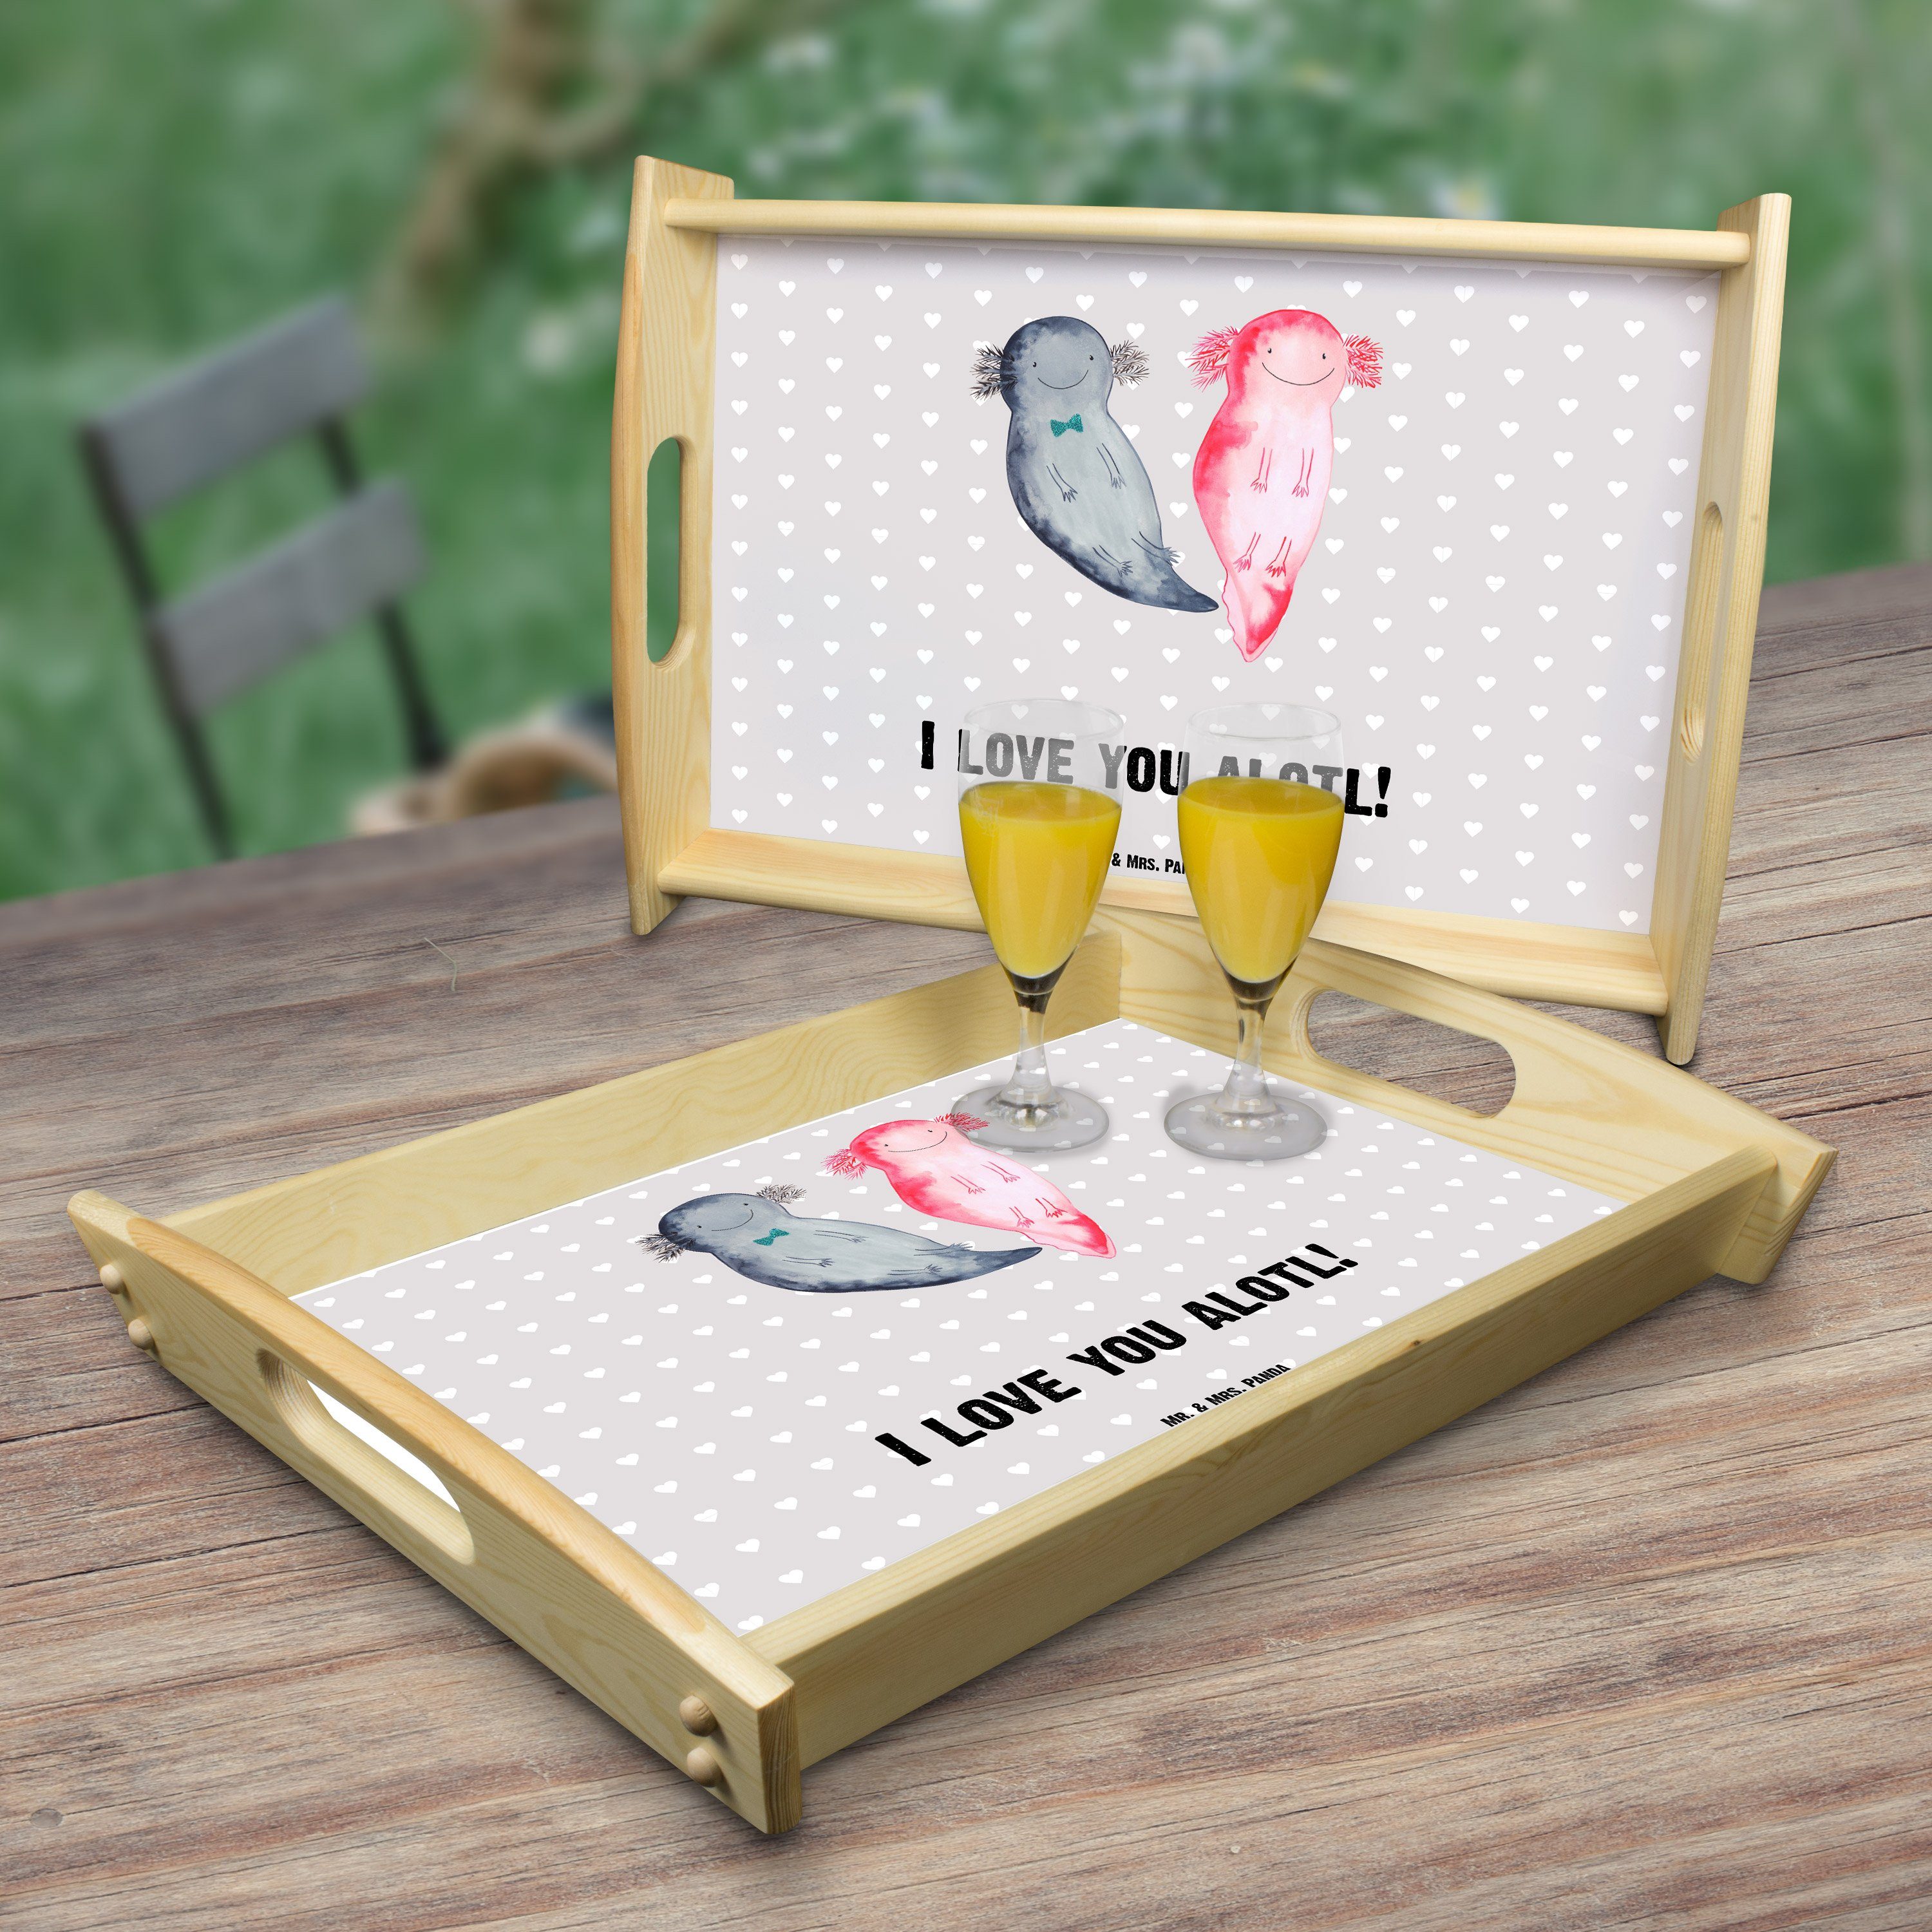 Mr. & Mrs. (1-tlg) - Axolotl lasiert, - Frühstückstabl, Hochzeitstag, Grau Tablett Pastell Geschenk, Liebe Panda Echtholz